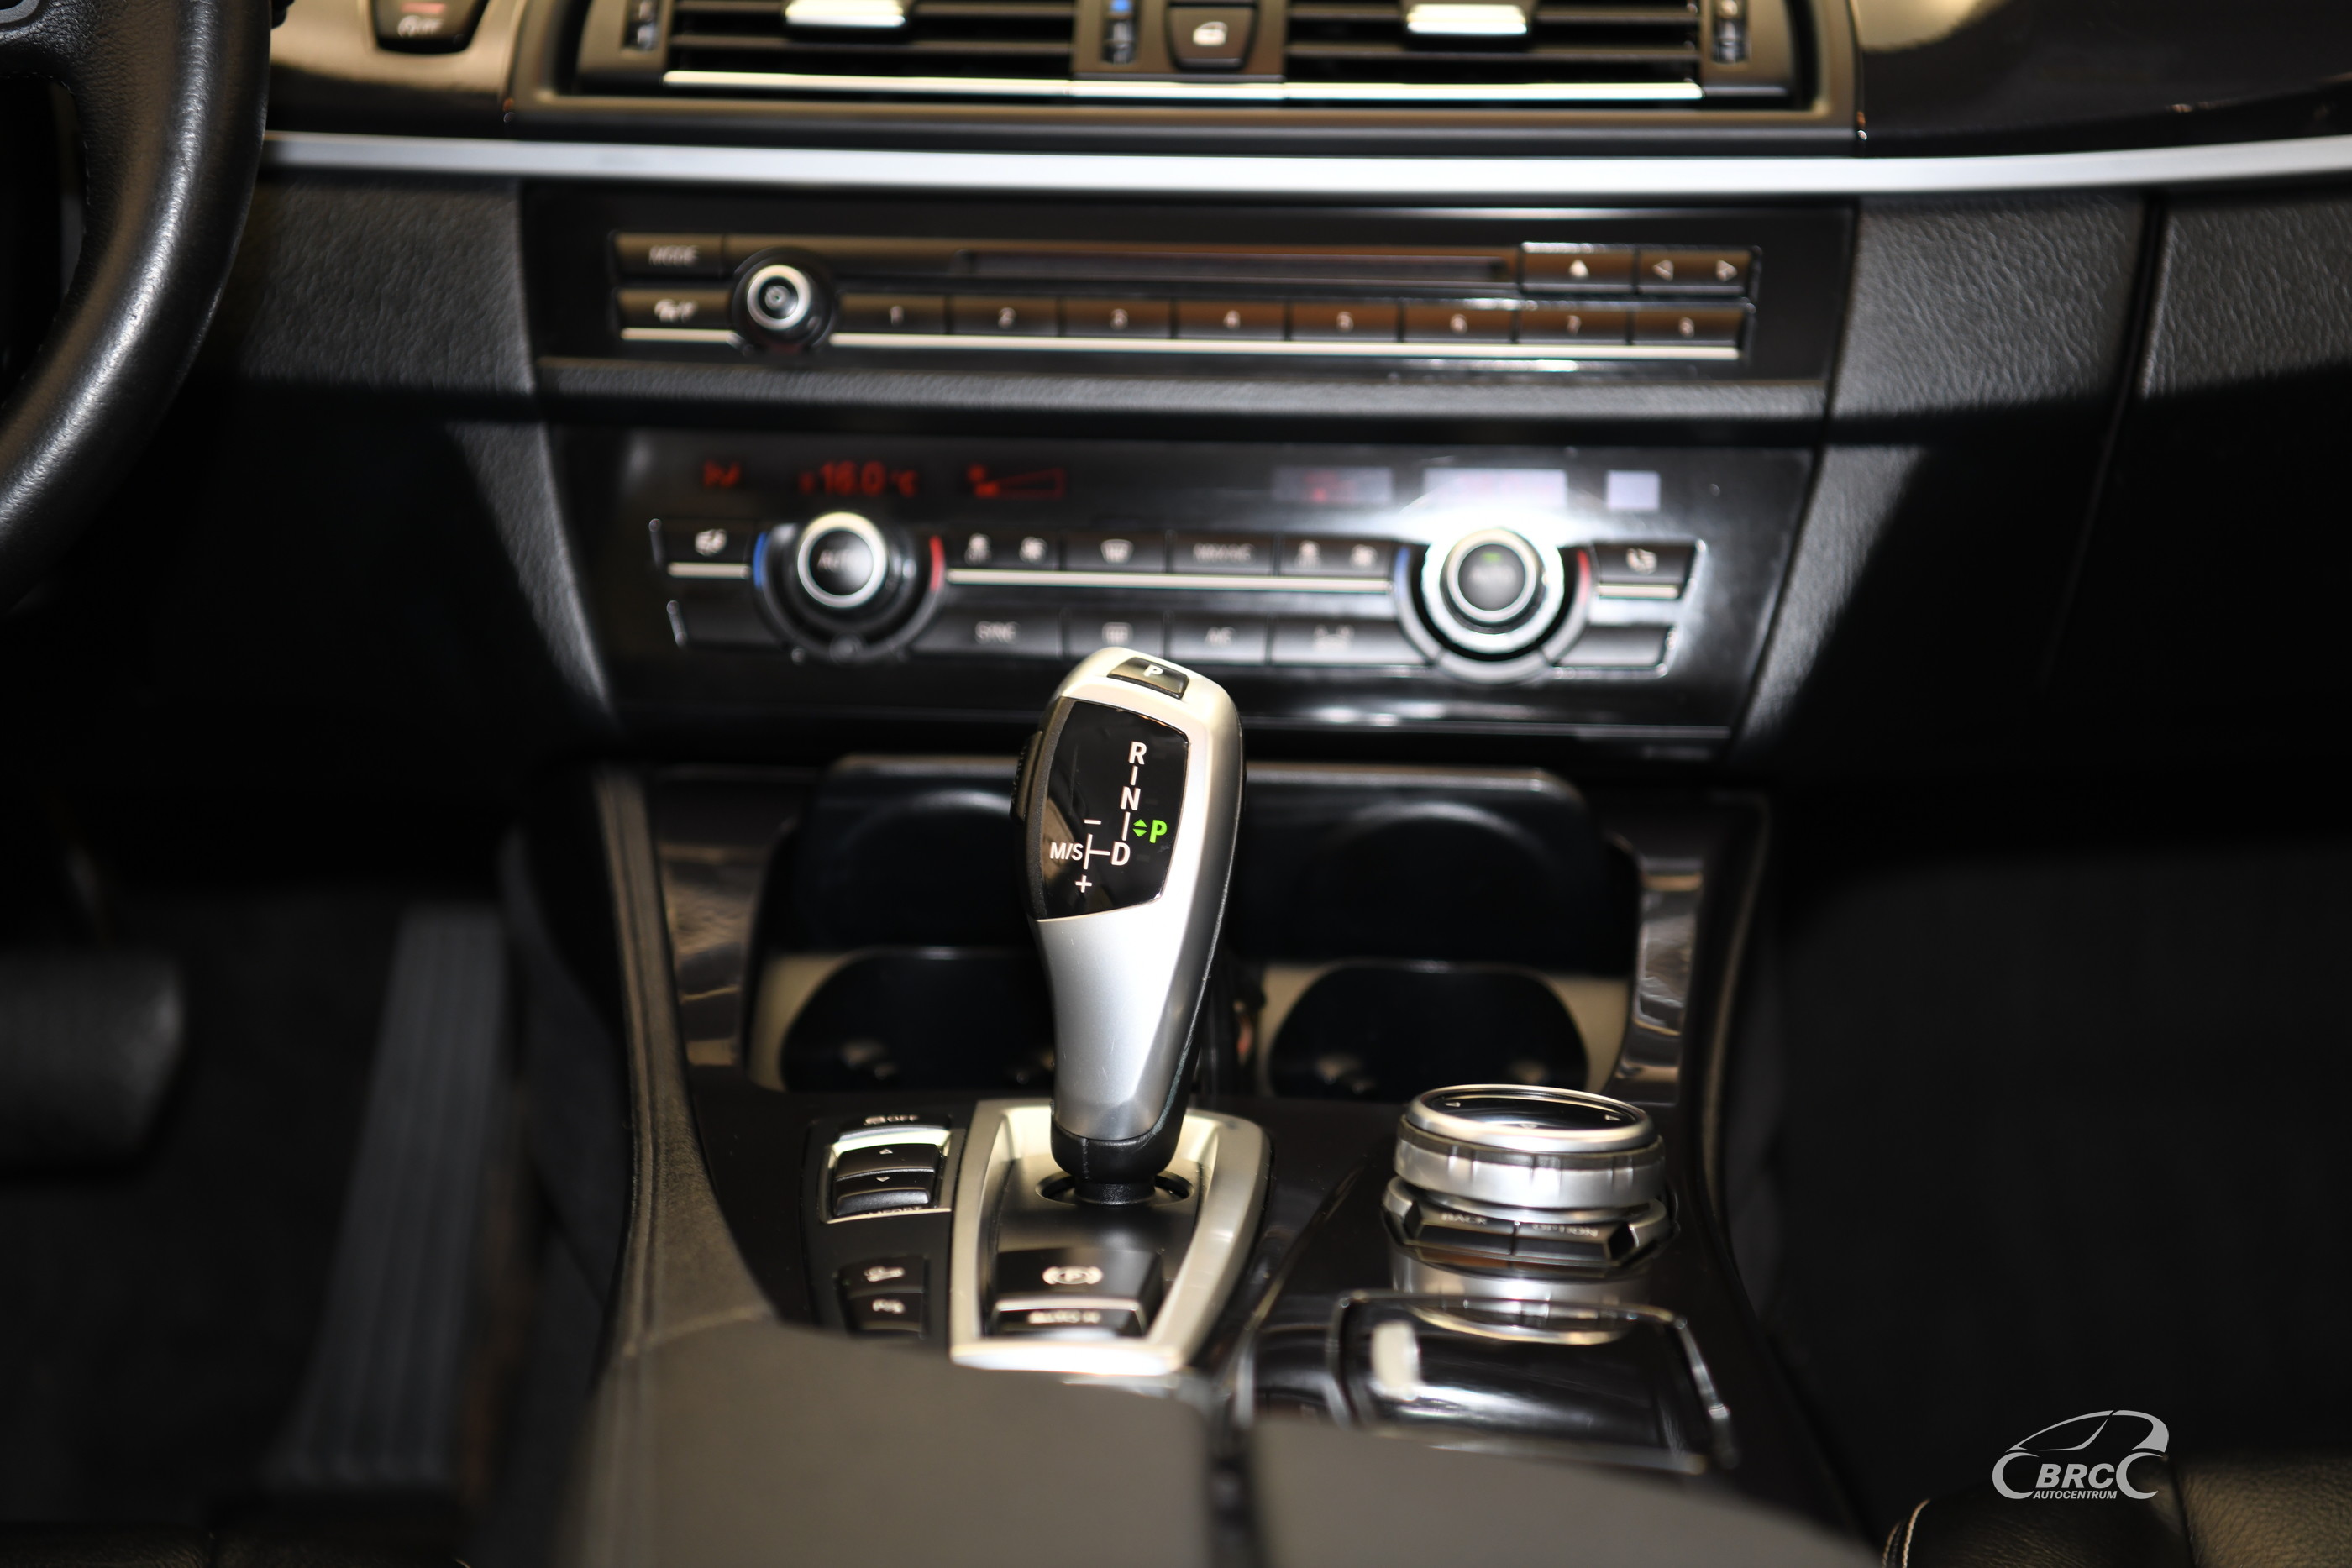 BMW 520 Xdrive 20d Touring Automatas